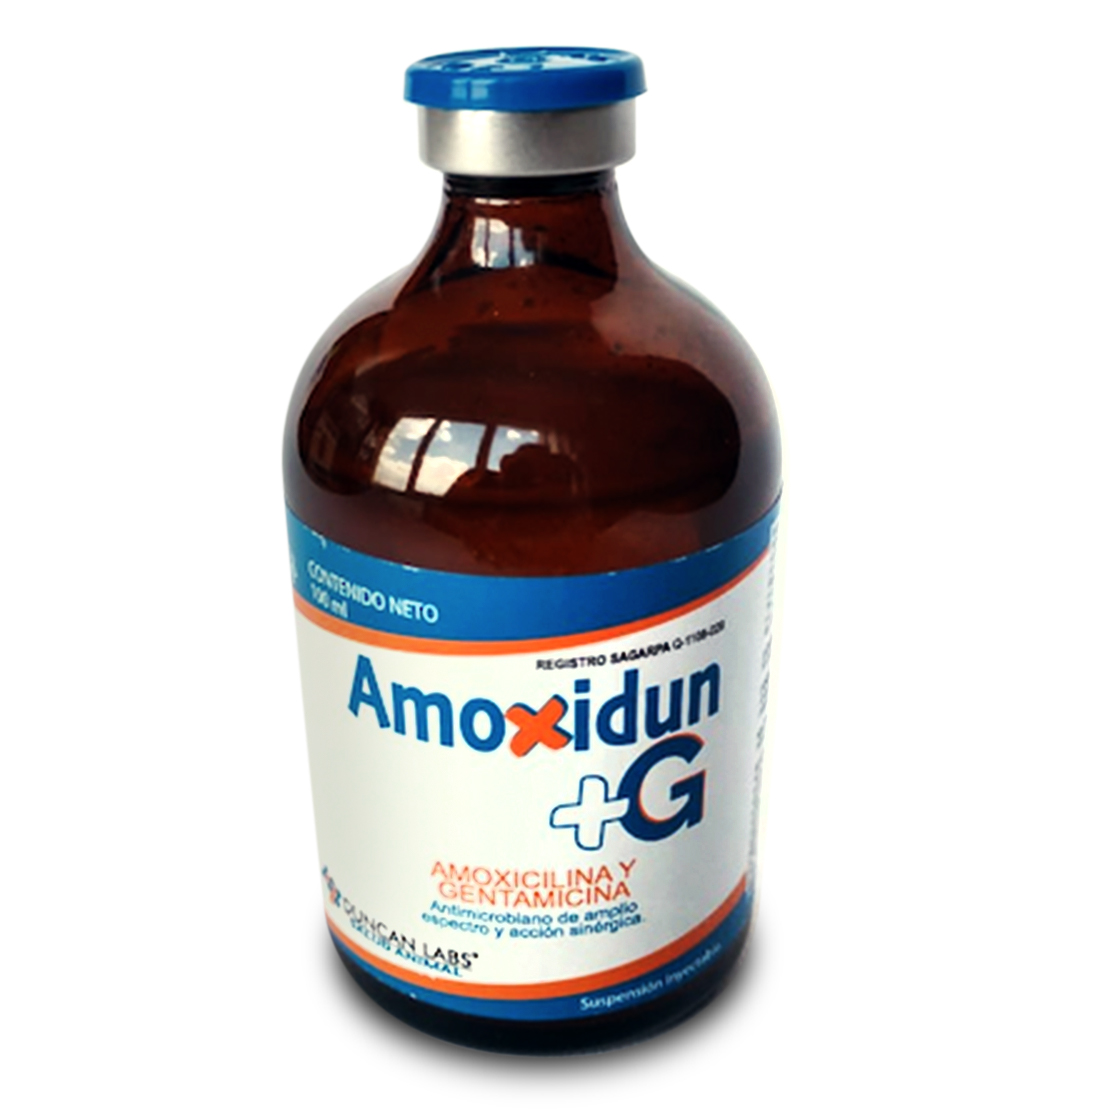 AMOXIDUN +G